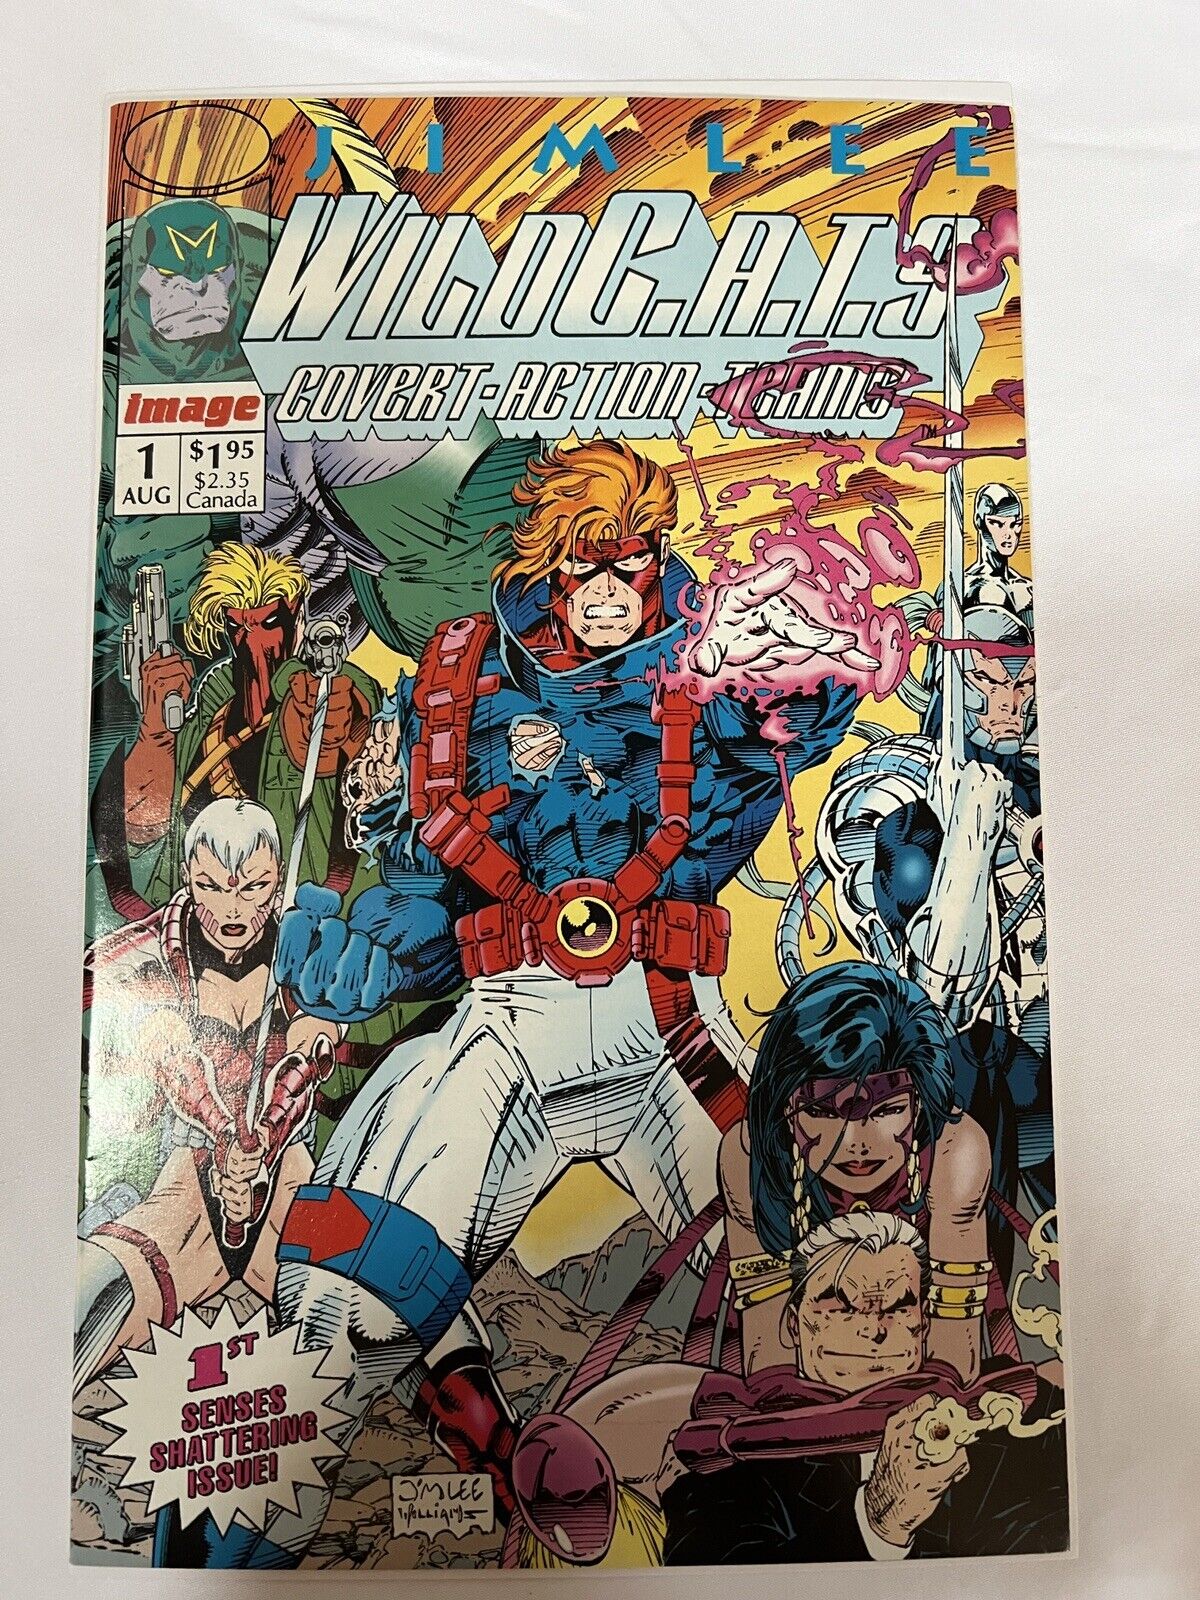 Wildc.A.T.S: Covert Action Teams #1 (Image Comics Malibu Comics August 1992)